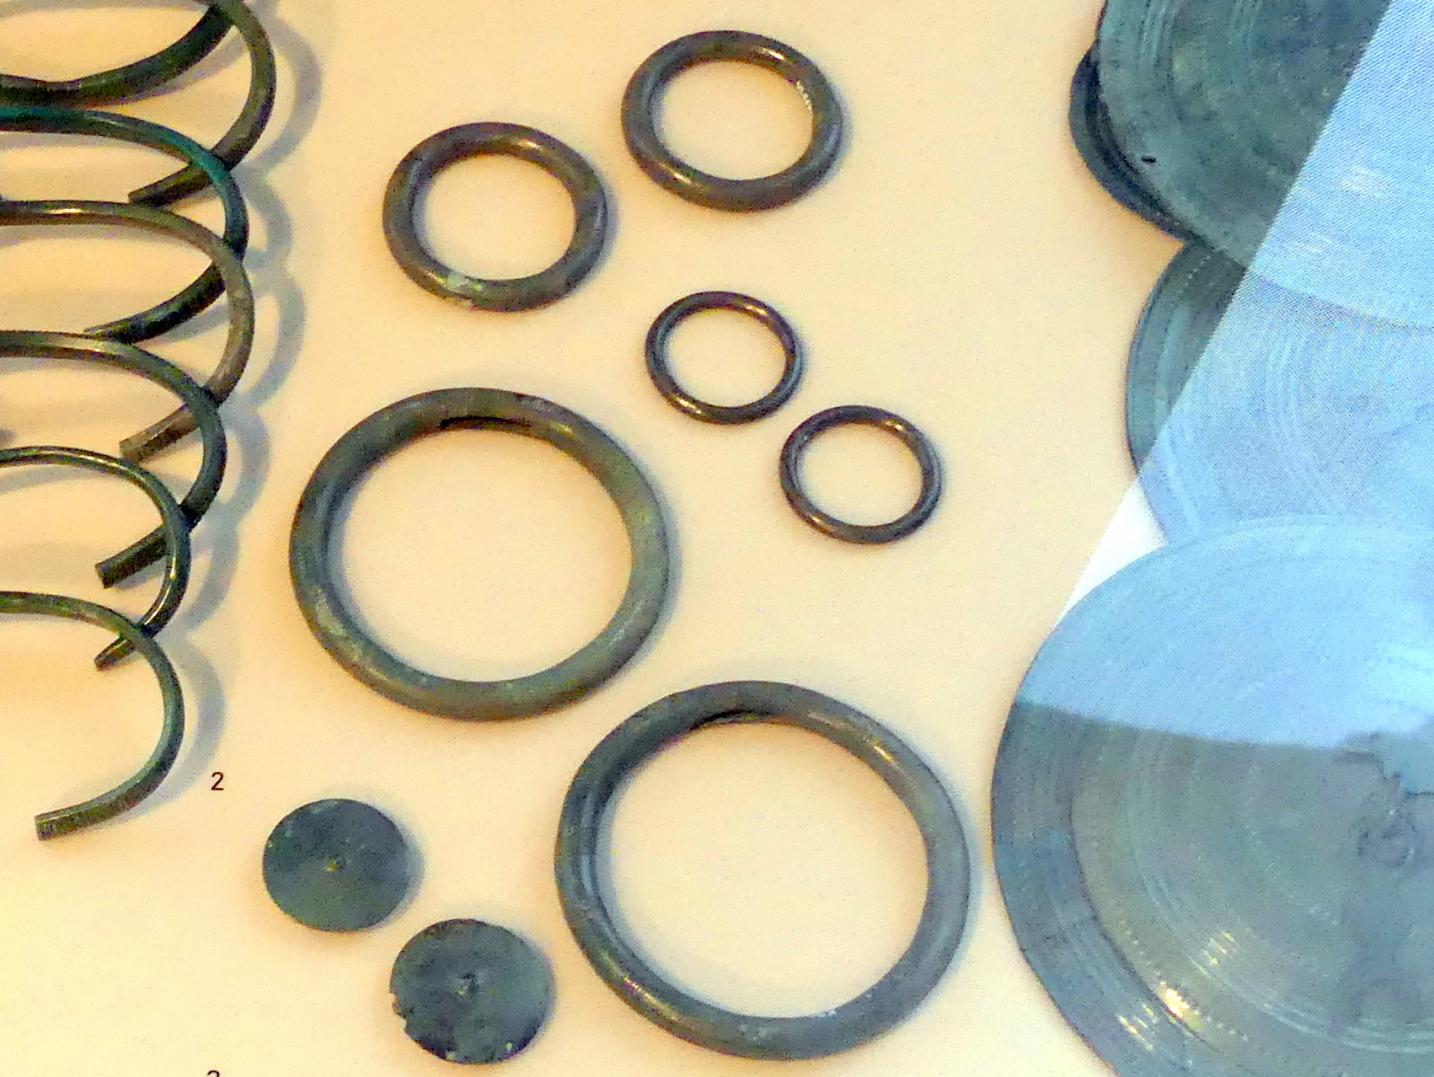 Ringverteiler, Urnenfelderzeit, 1400 - 700 v. Chr., 1000 - 700 v. Chr., Bild 1/2